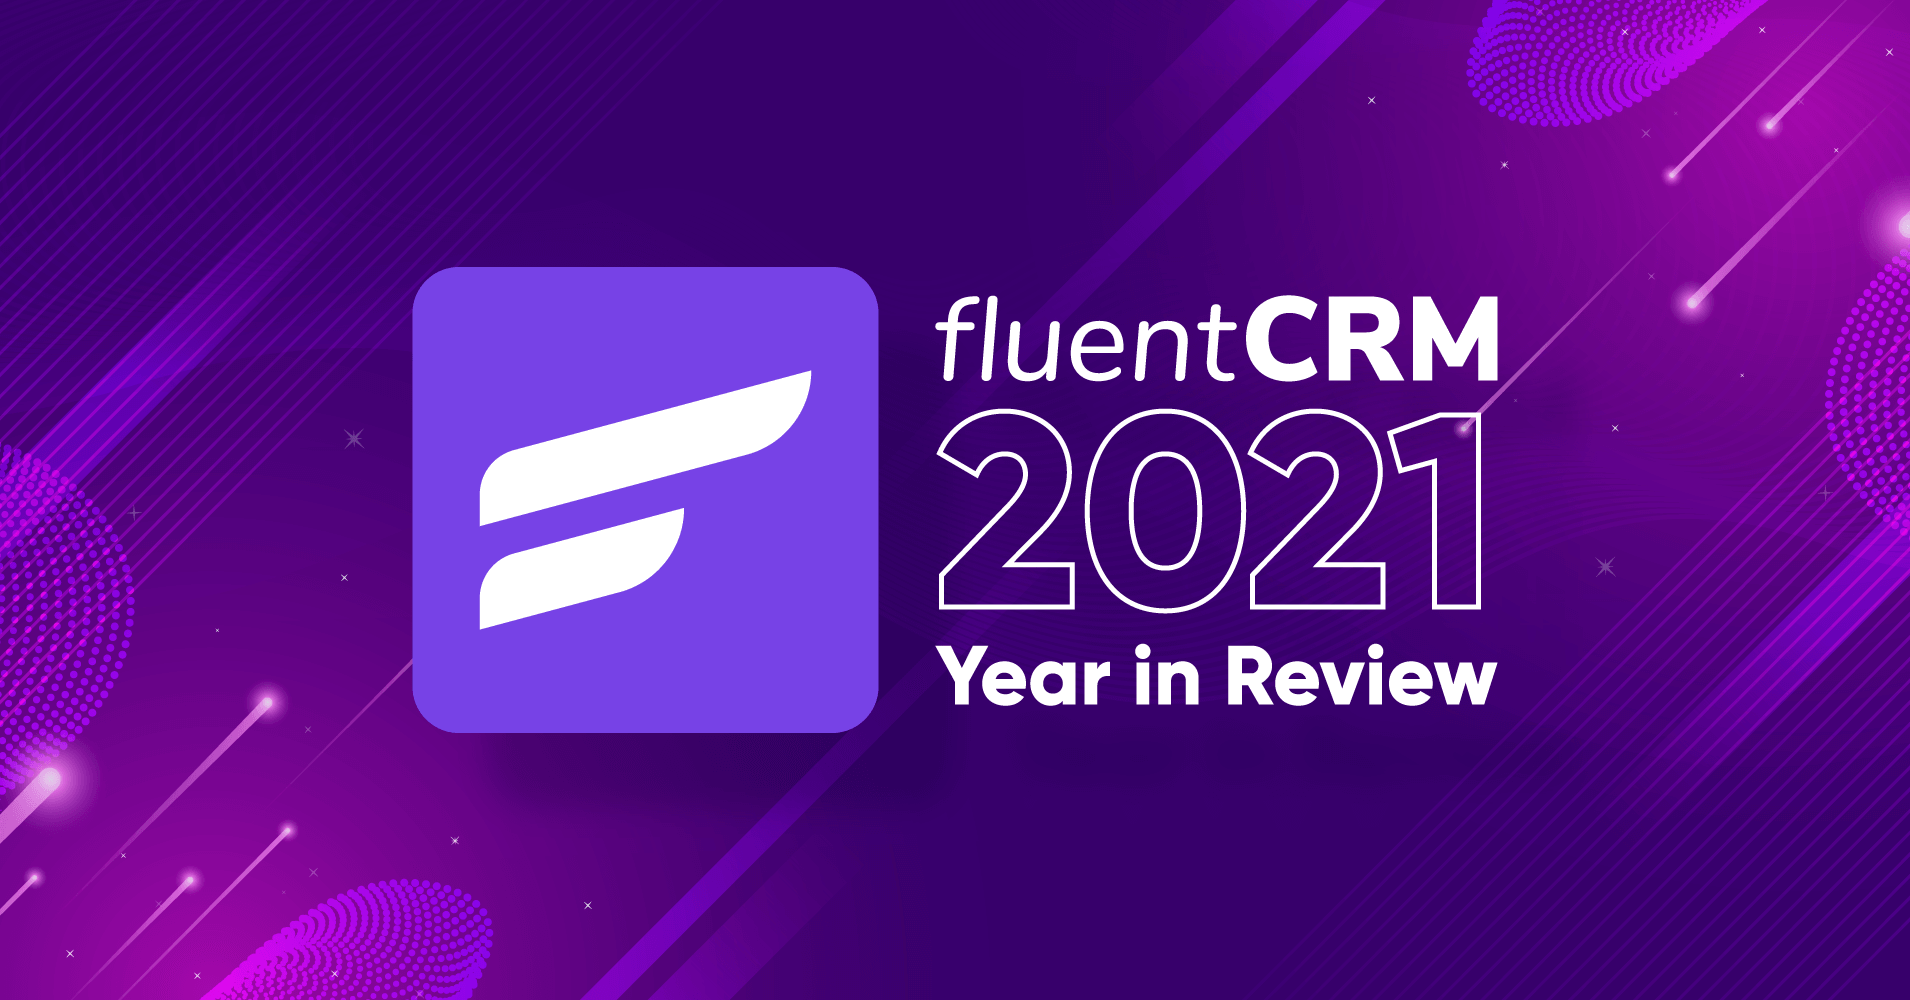 fluentcrm year in review 2021, fluentcrm, fluentcrm 2021